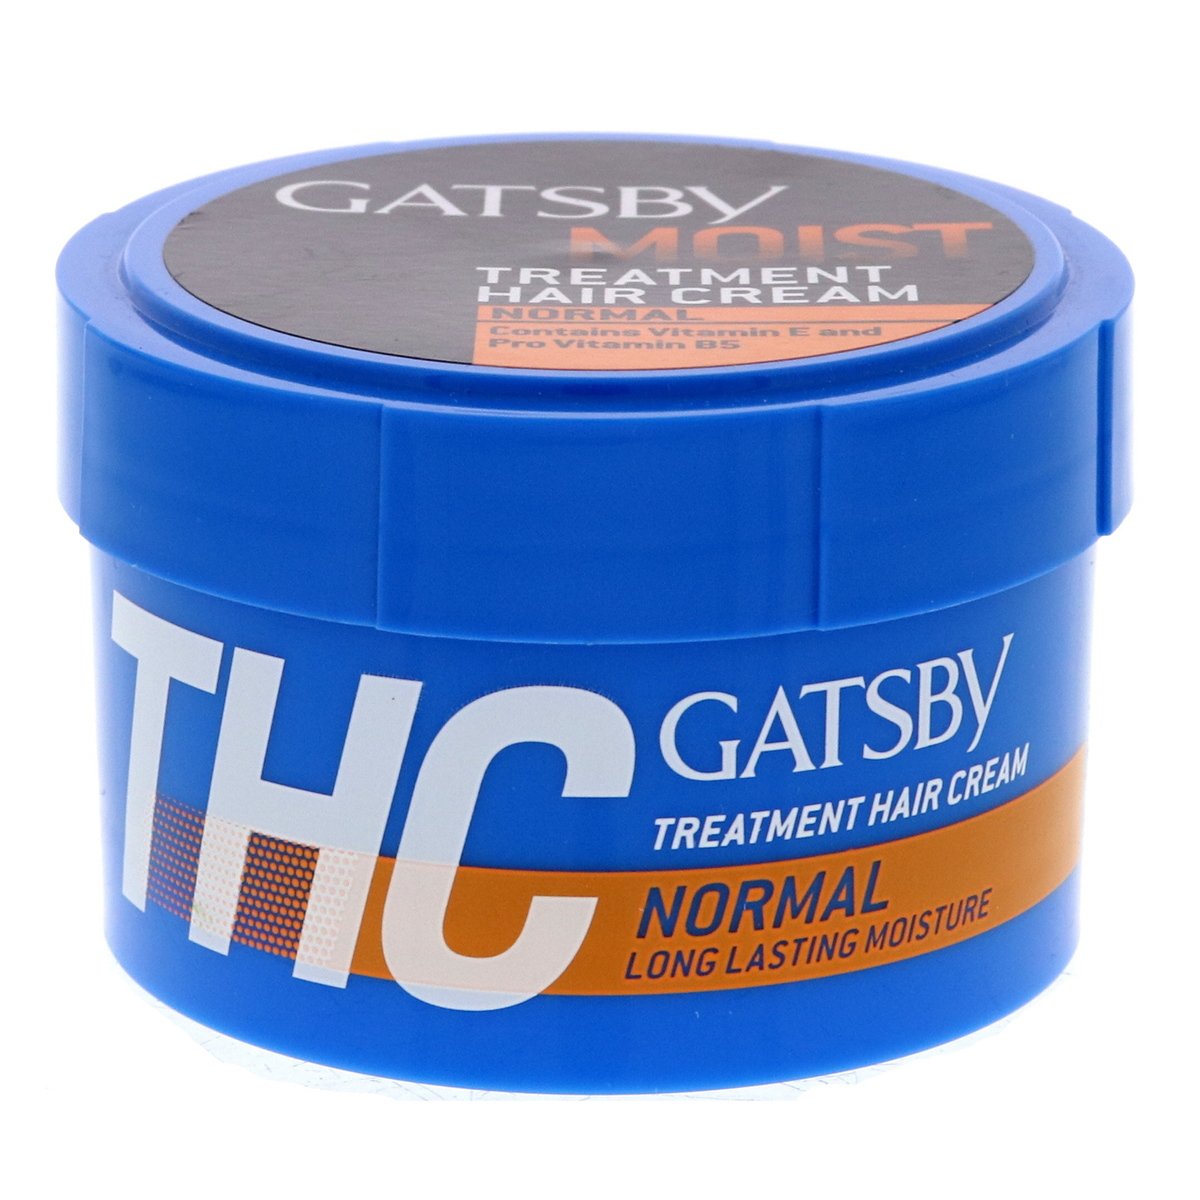 Gatsby Normal Long Lasting Moisture Hair Cream 125g Online at Best